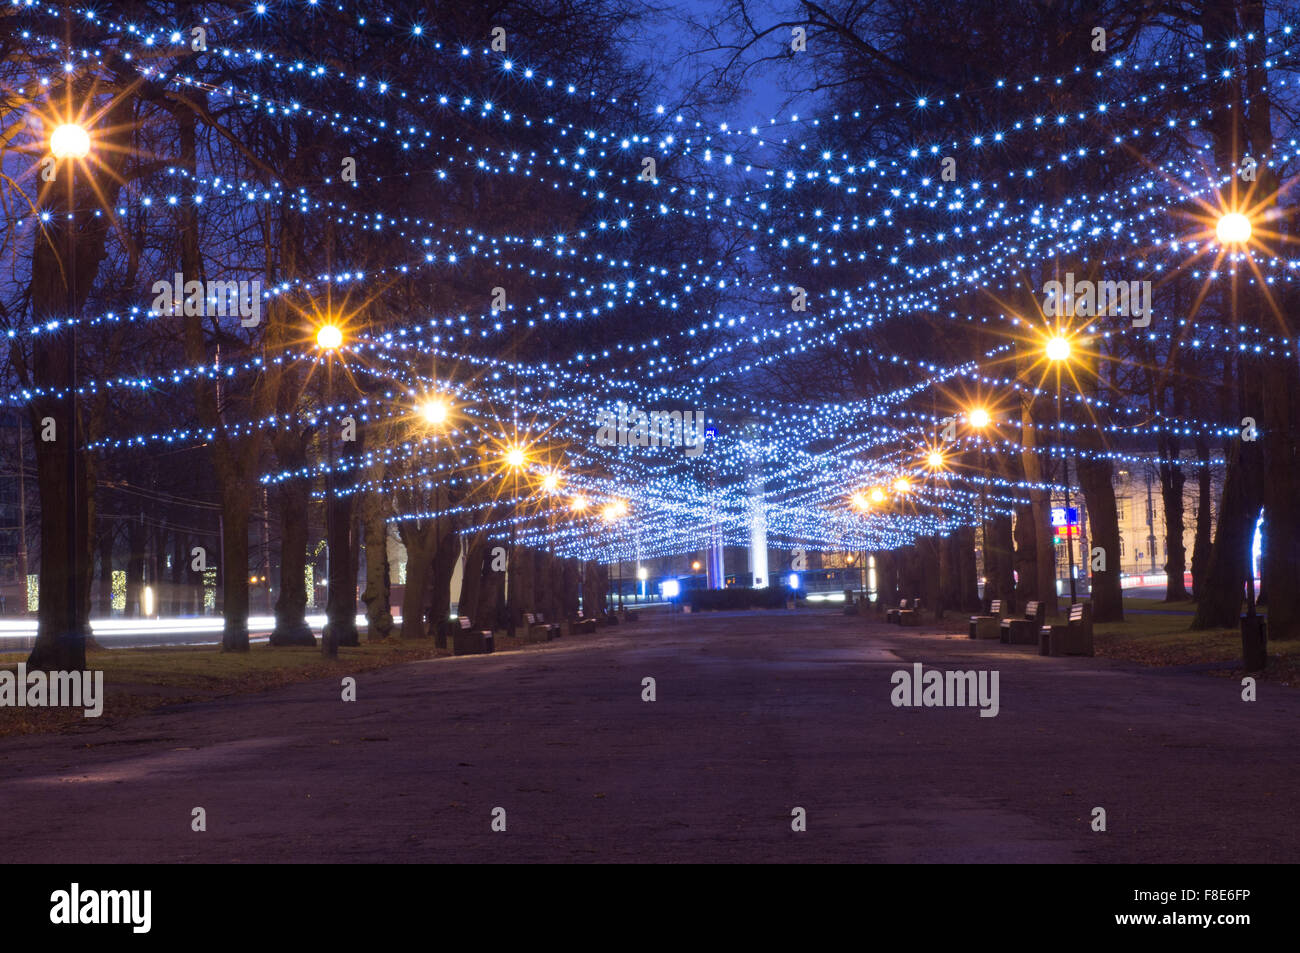 New Year and Christmas festoon illumination on city alley Stock Photo